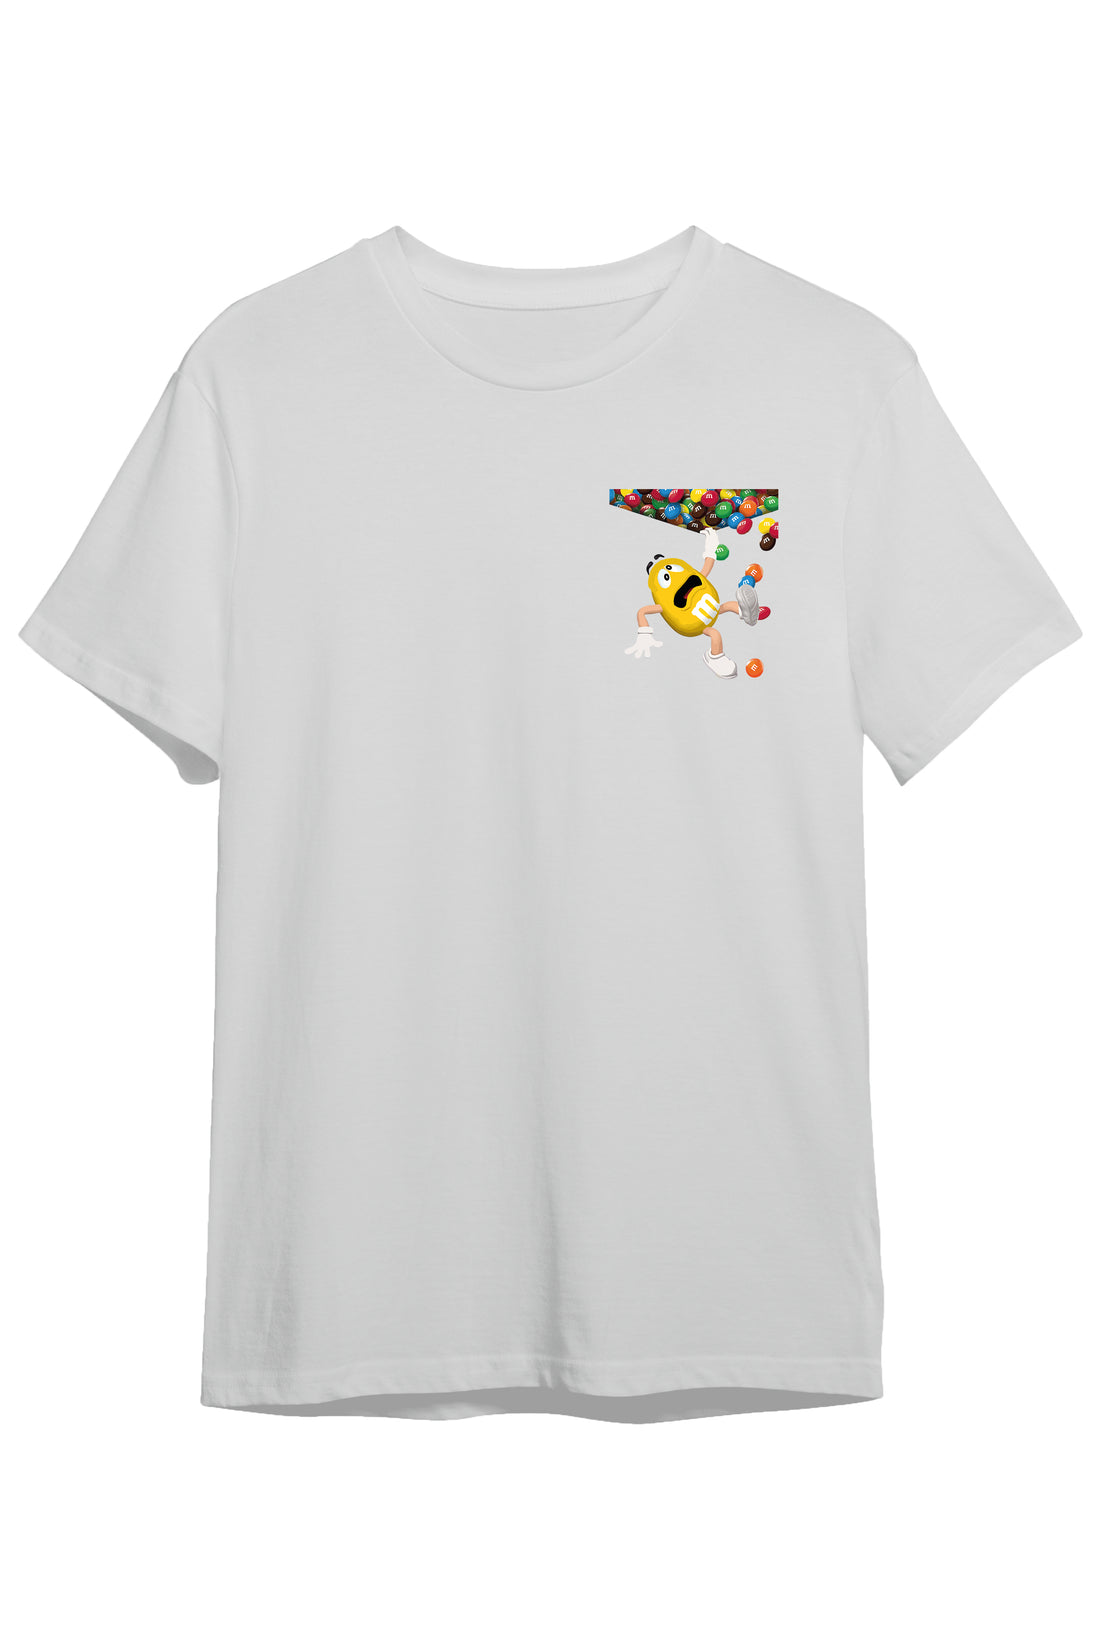 M&M - Çocuk Tshirt - Regular